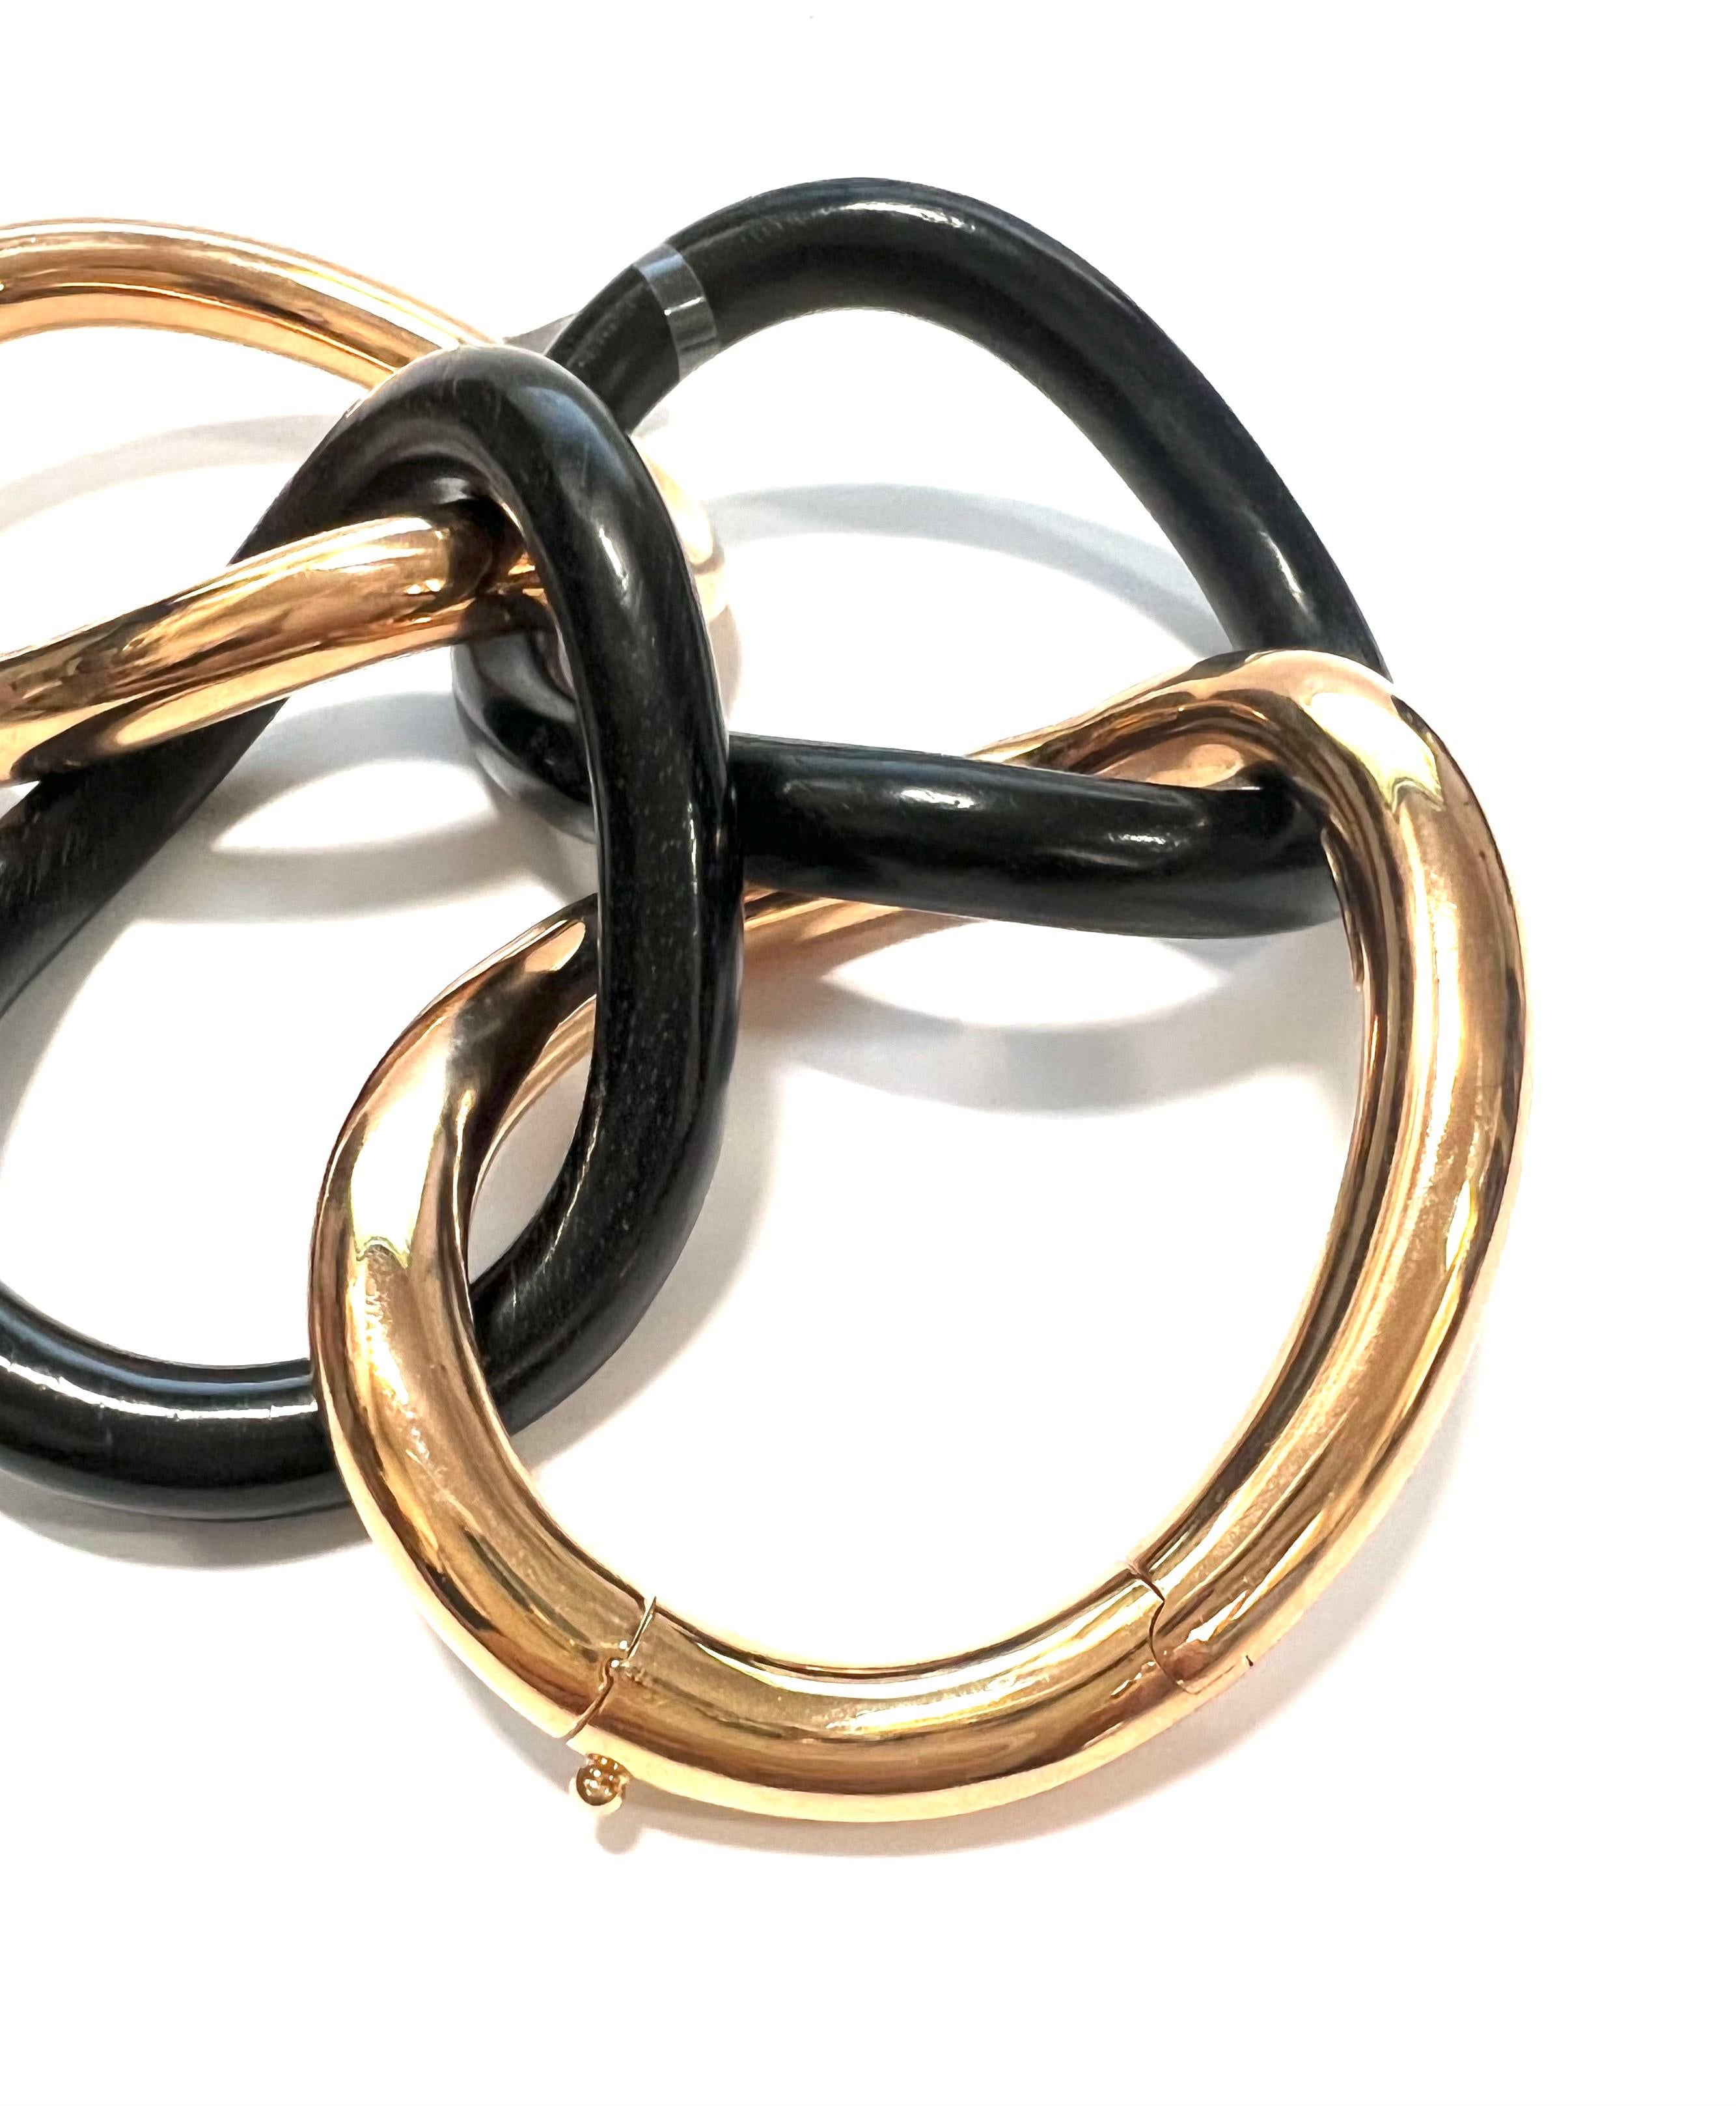 Women's or Men's Bracelet in Big Groumette Links in 18k Rose Gold and Ebony